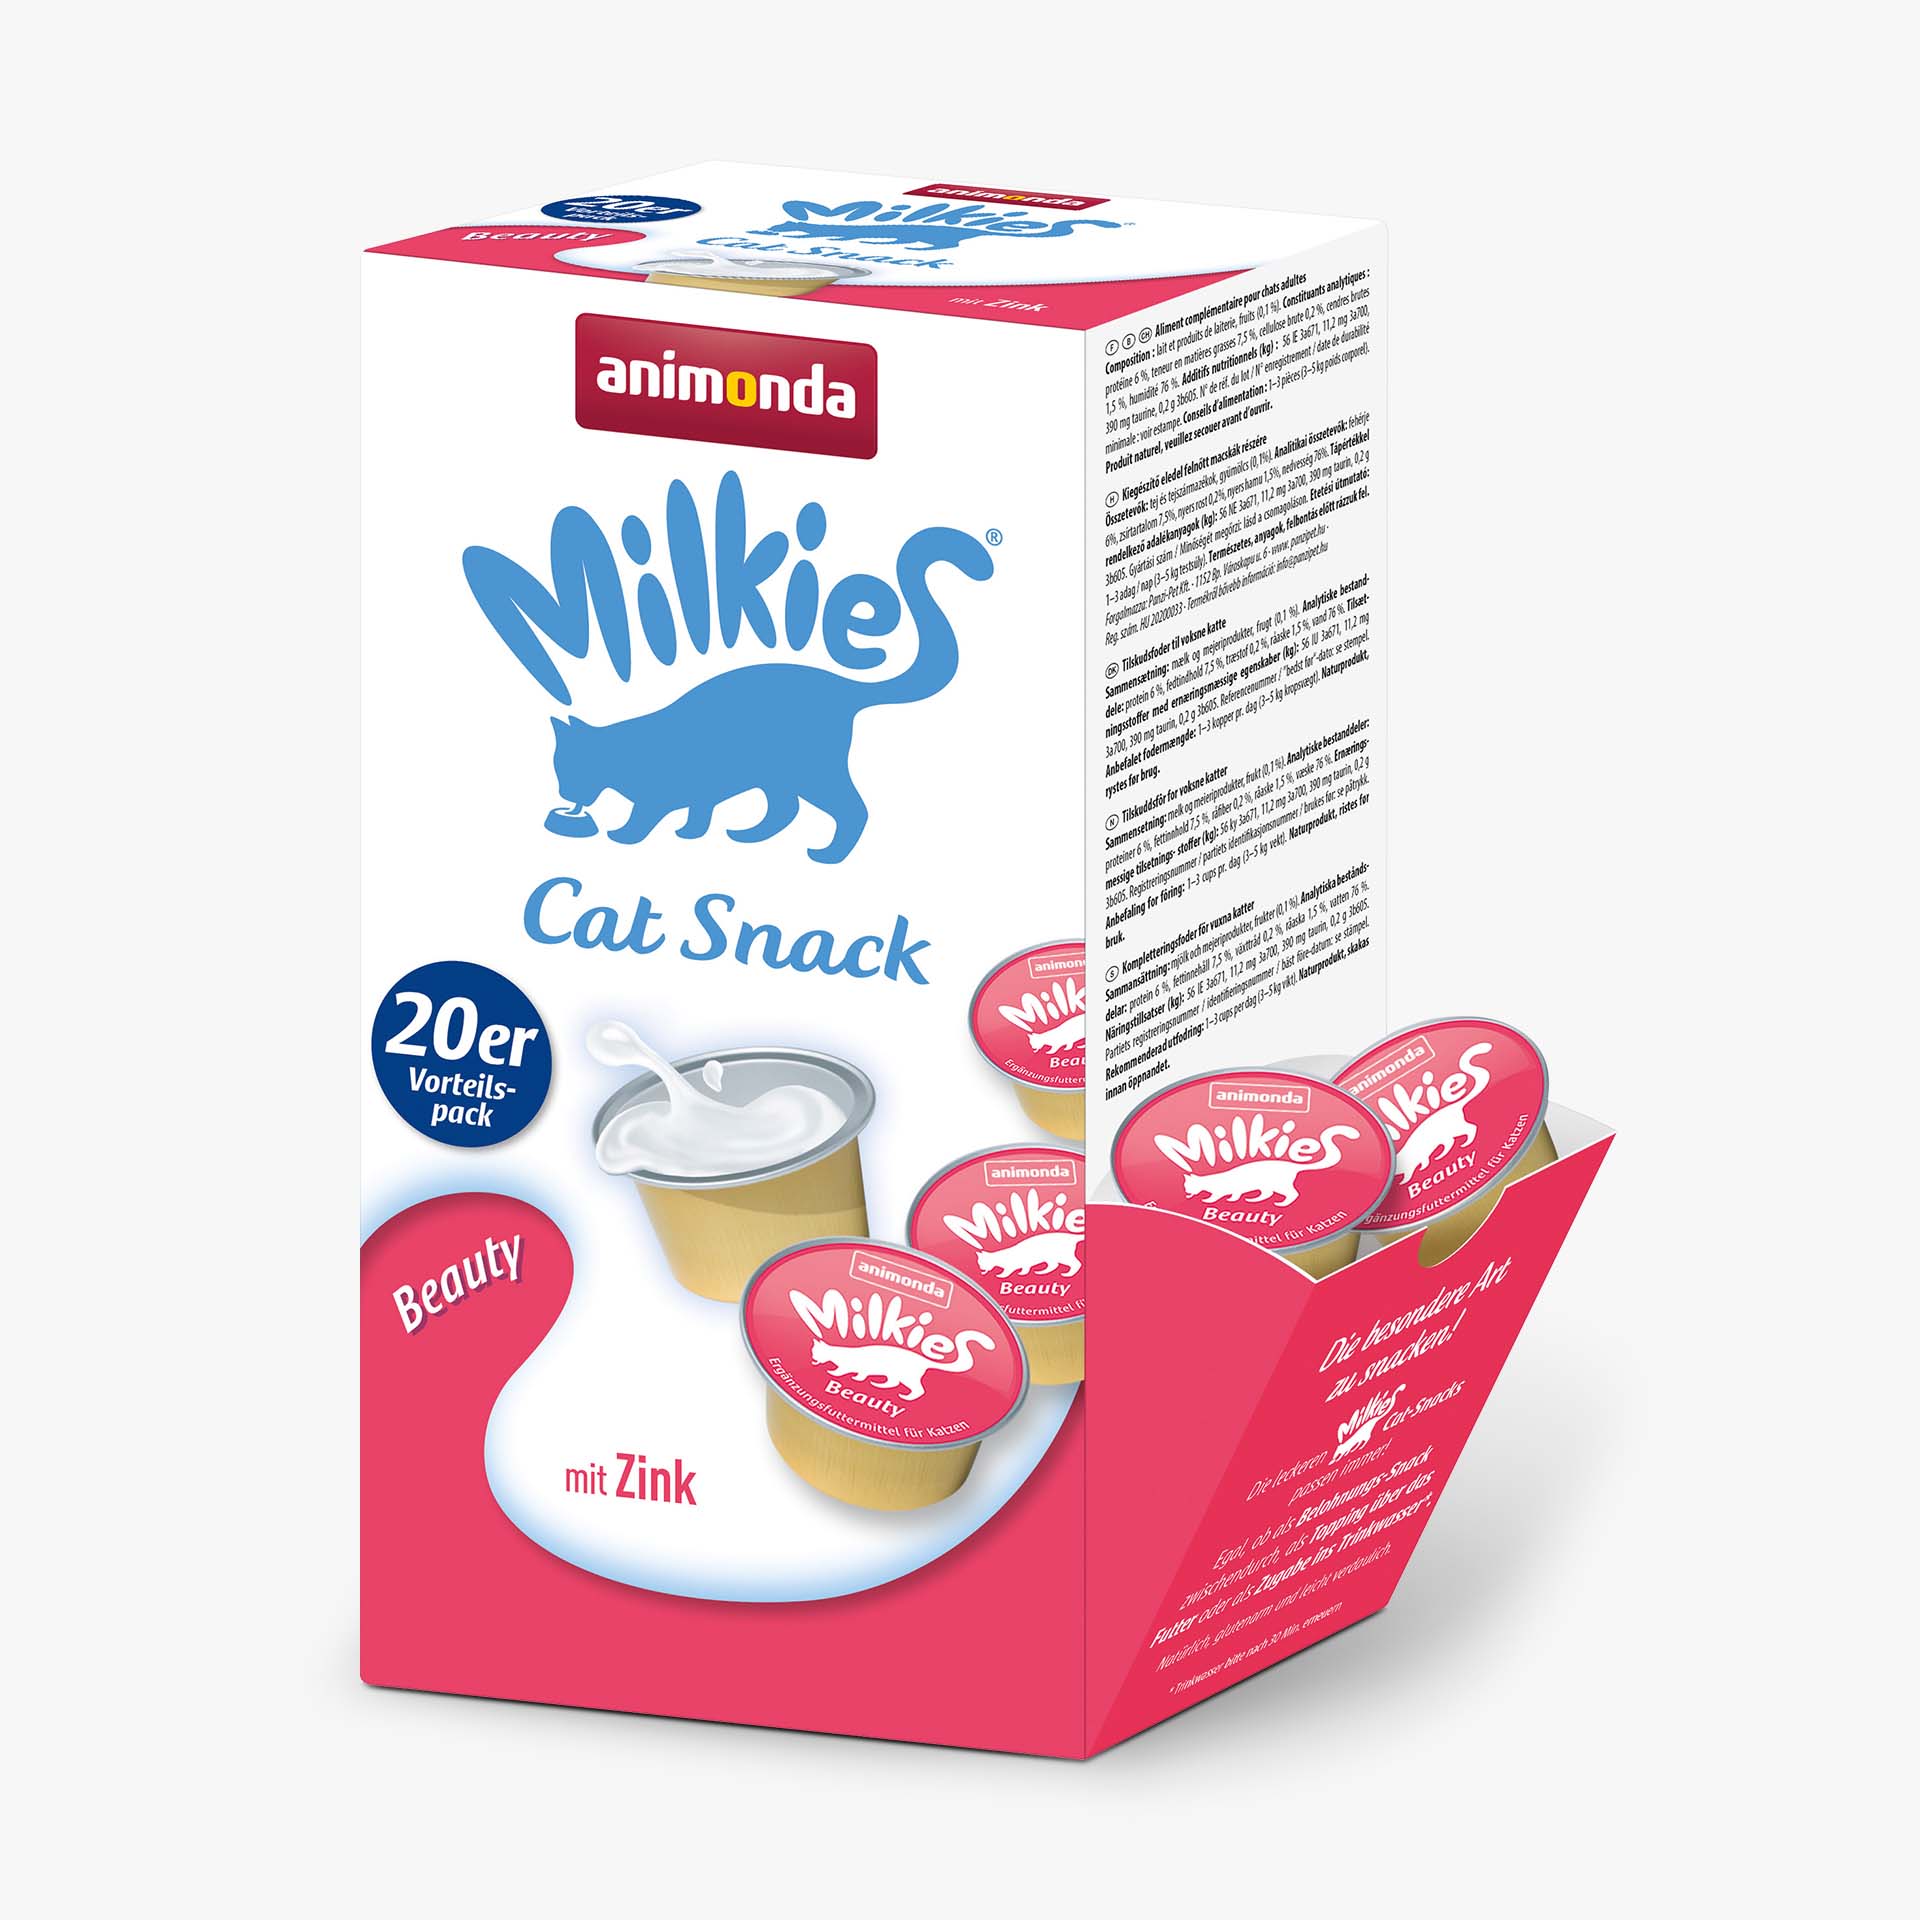 Milkies Beauty - value pack of 20 